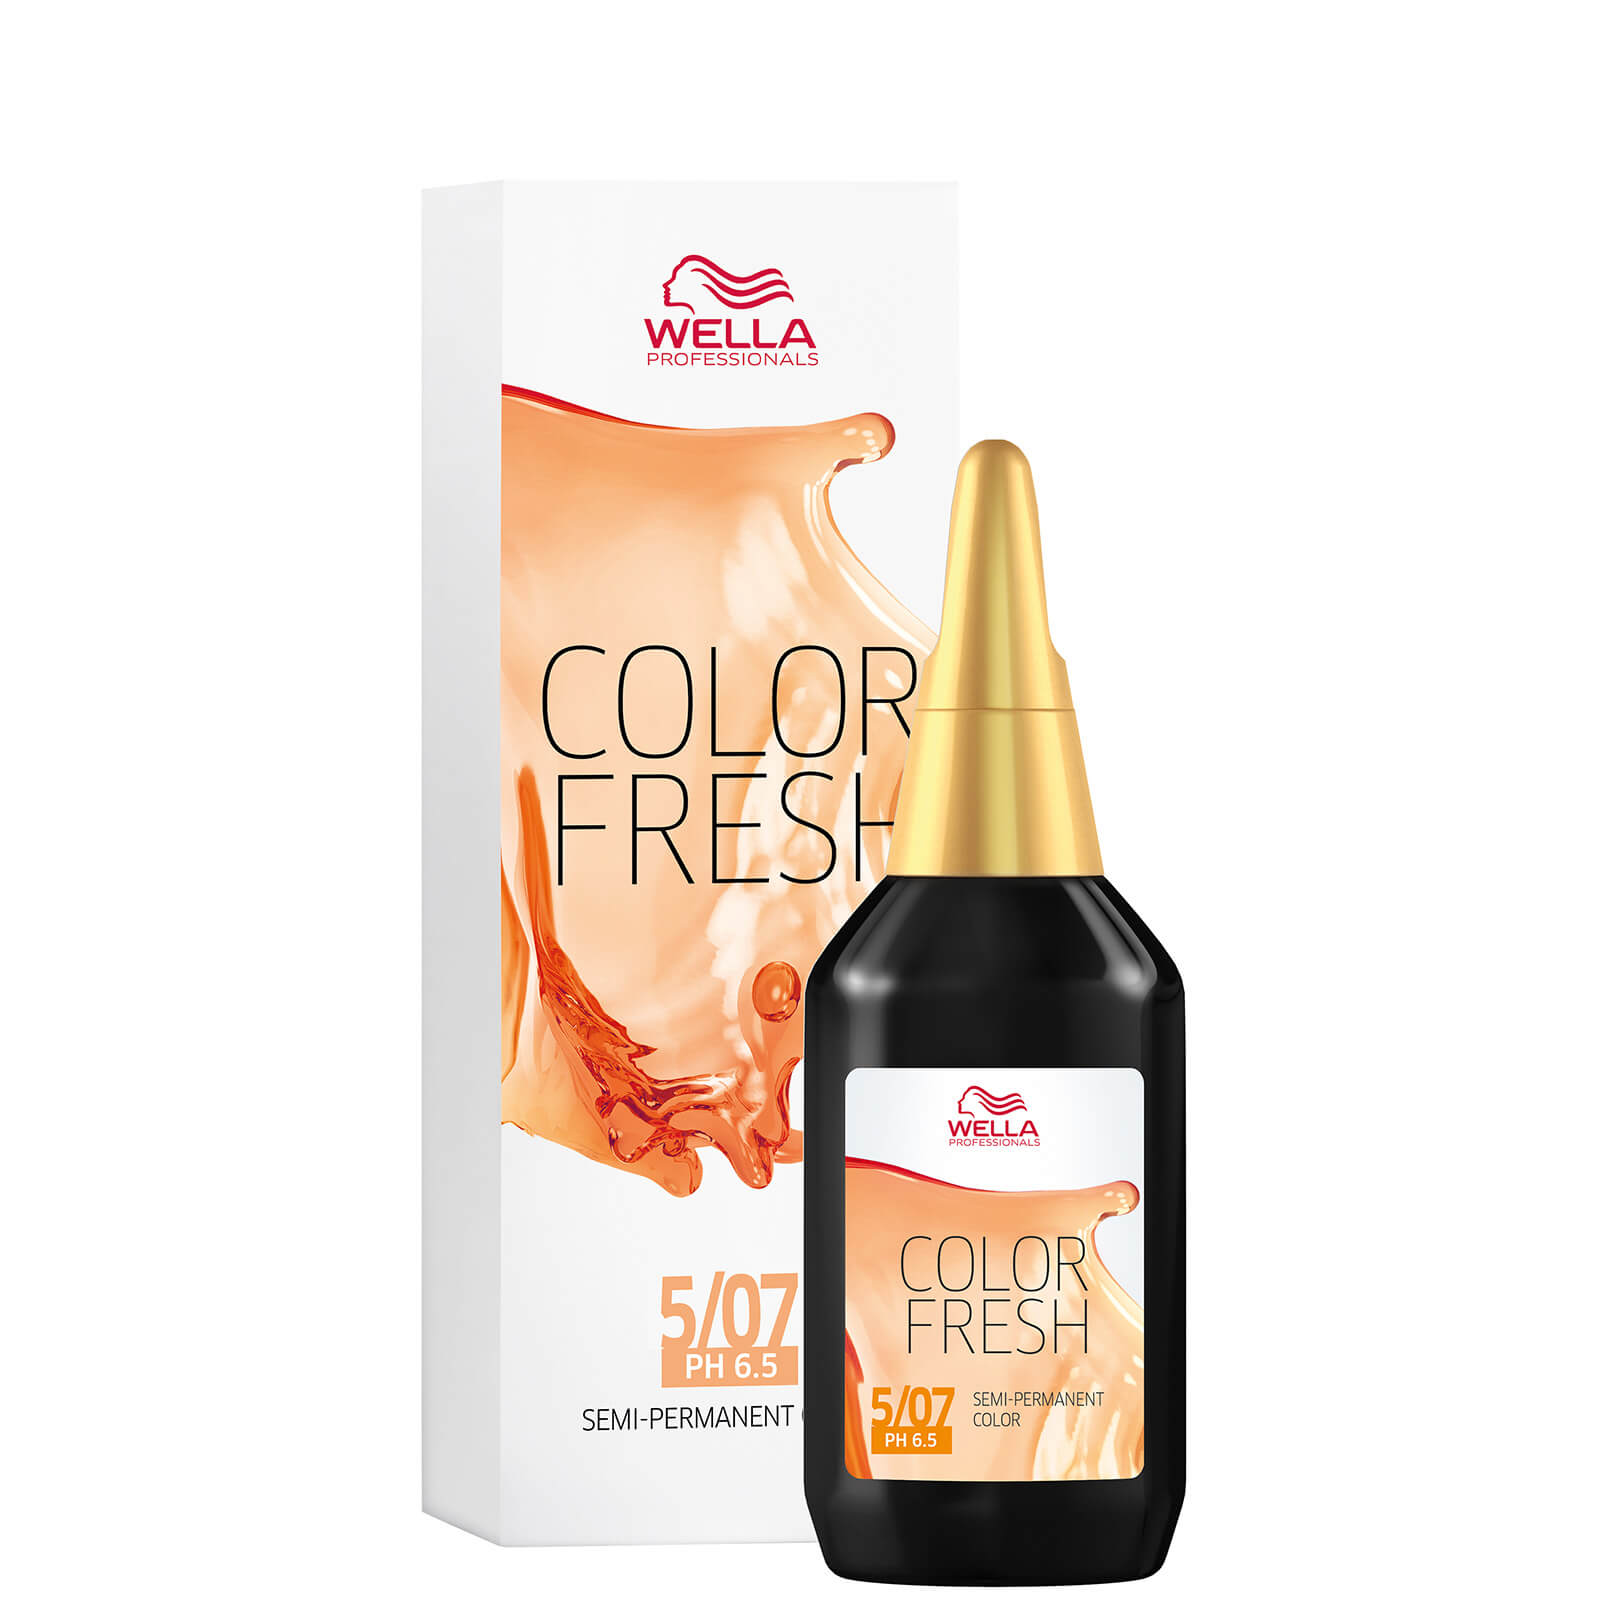 Wella Professionals Color Fresh Semi-Permanent Colour - 5/07 Natural Light Brown 75ml